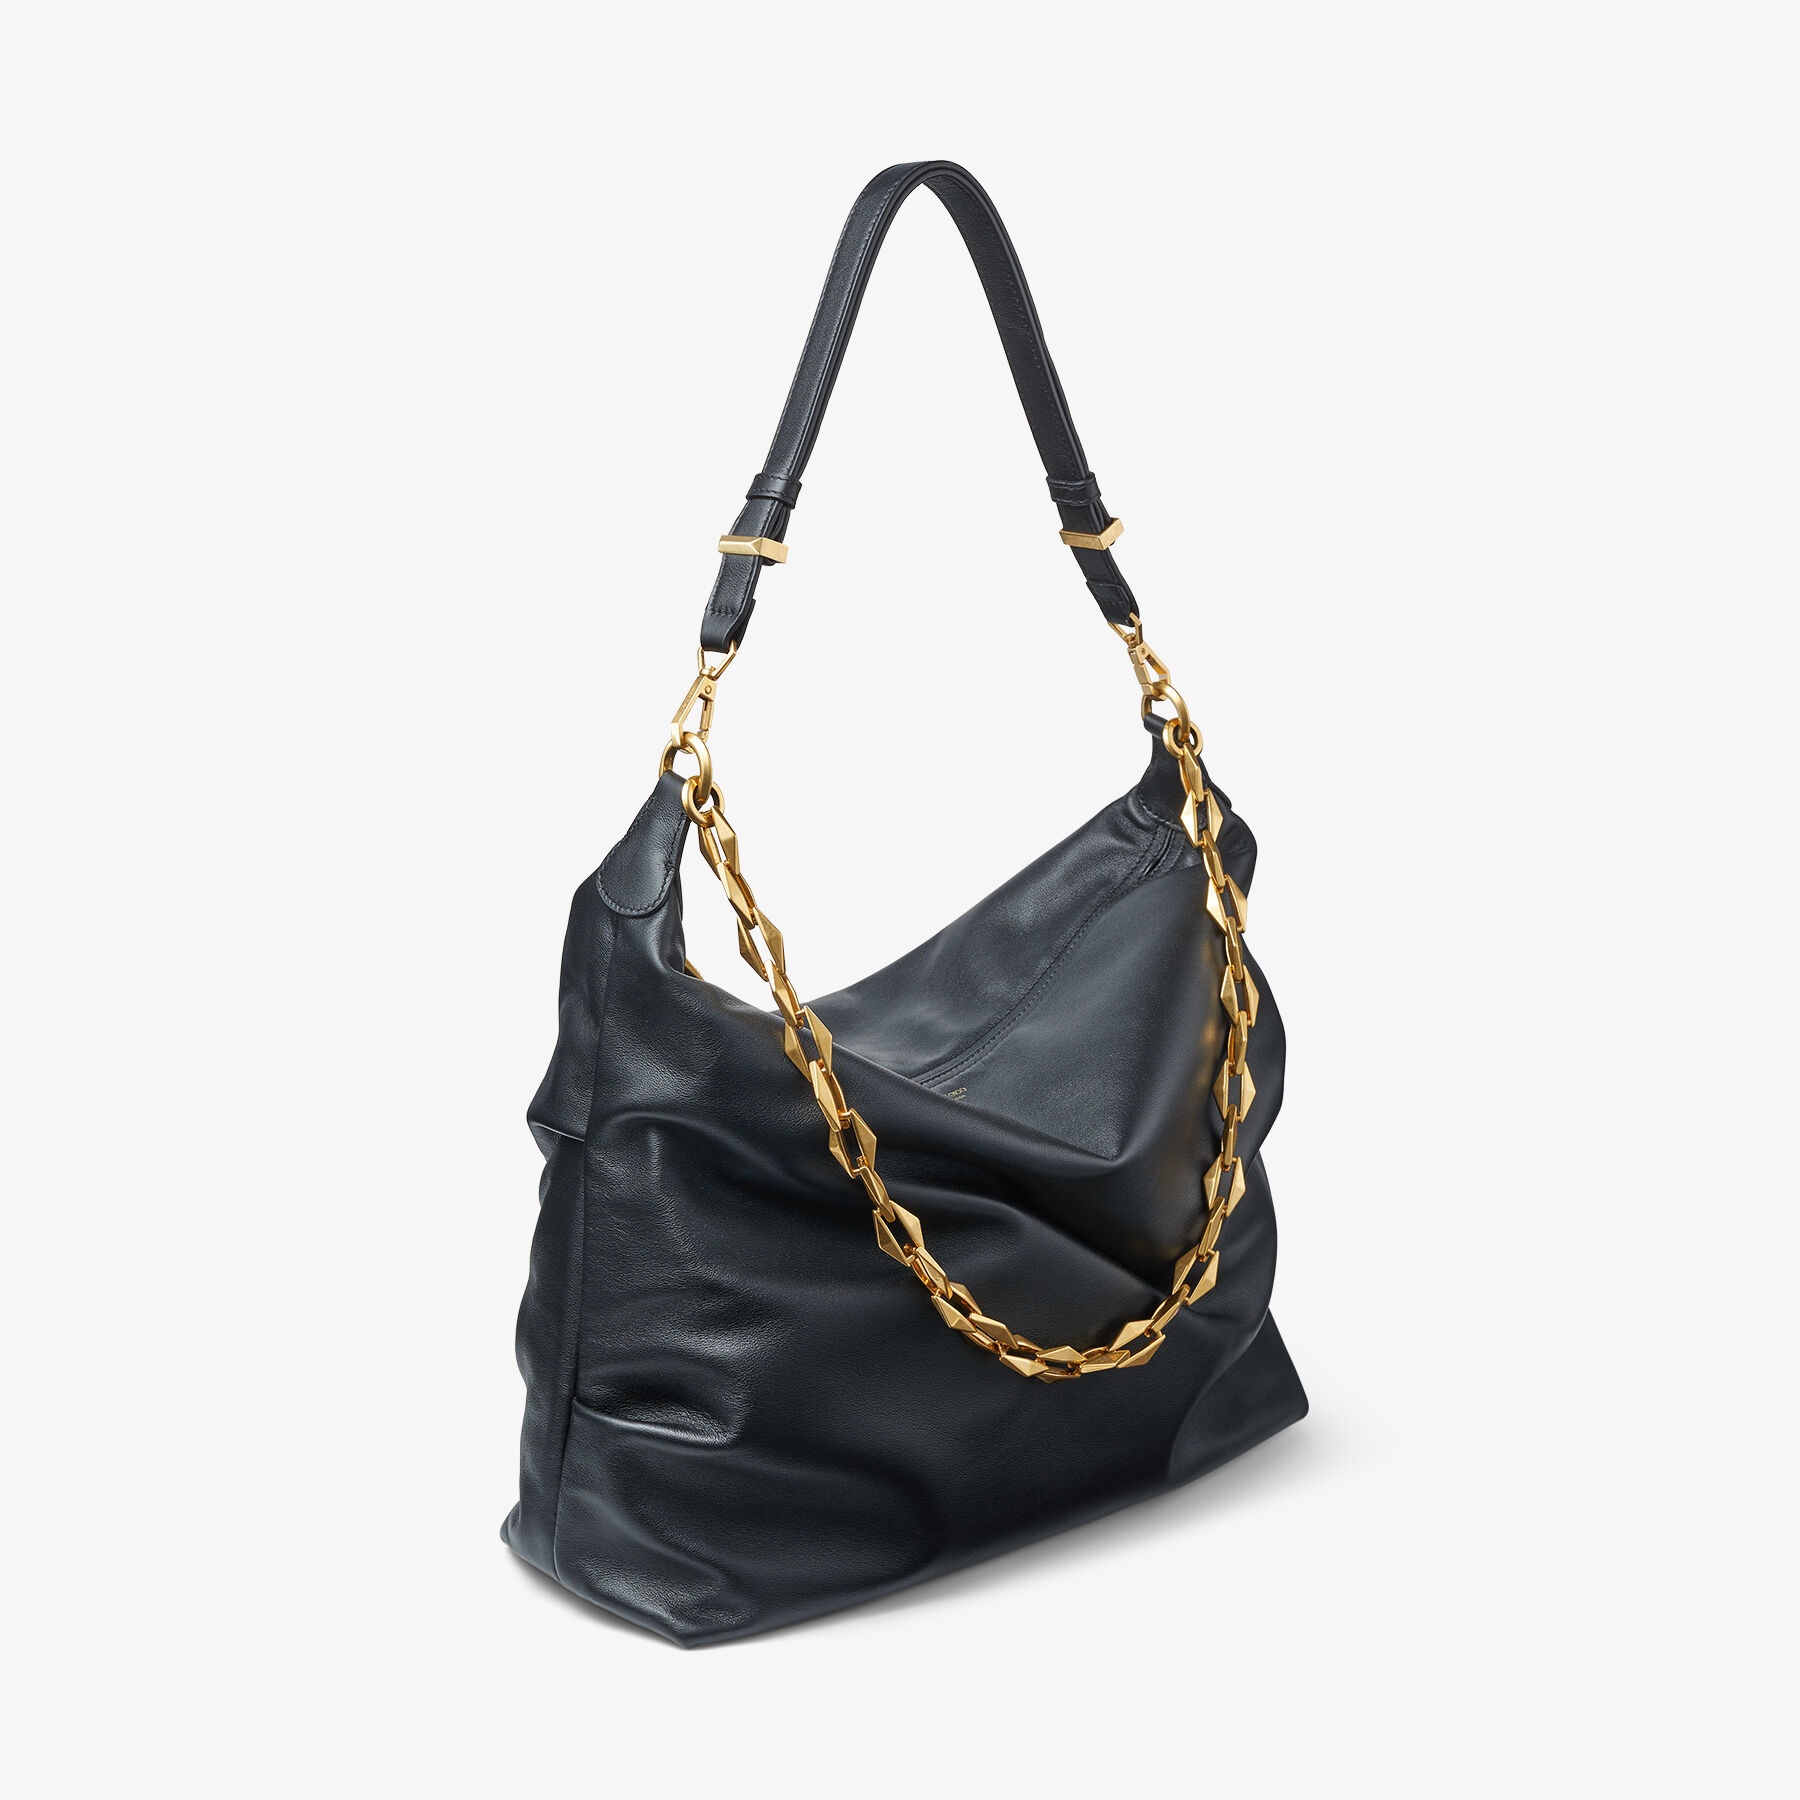 Diamond Soft Hobo M
Black Soft Calf Leather Hobo Bag with Chain Strap - 9